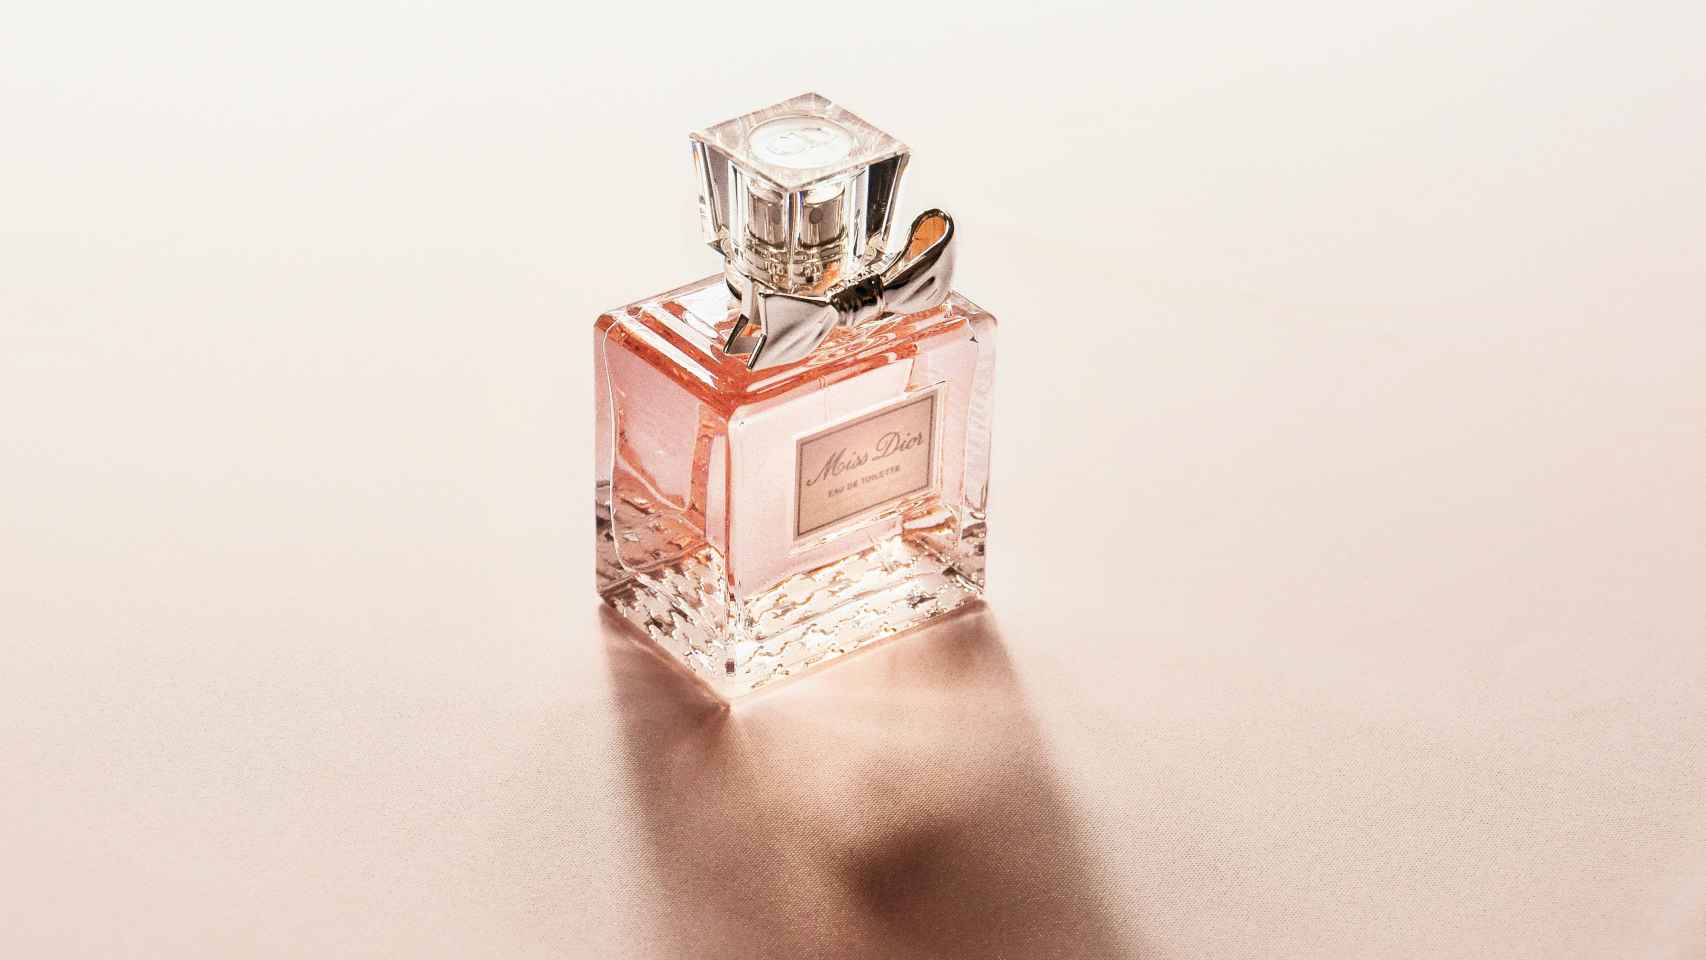 Detalle del perfume Miss Dior.